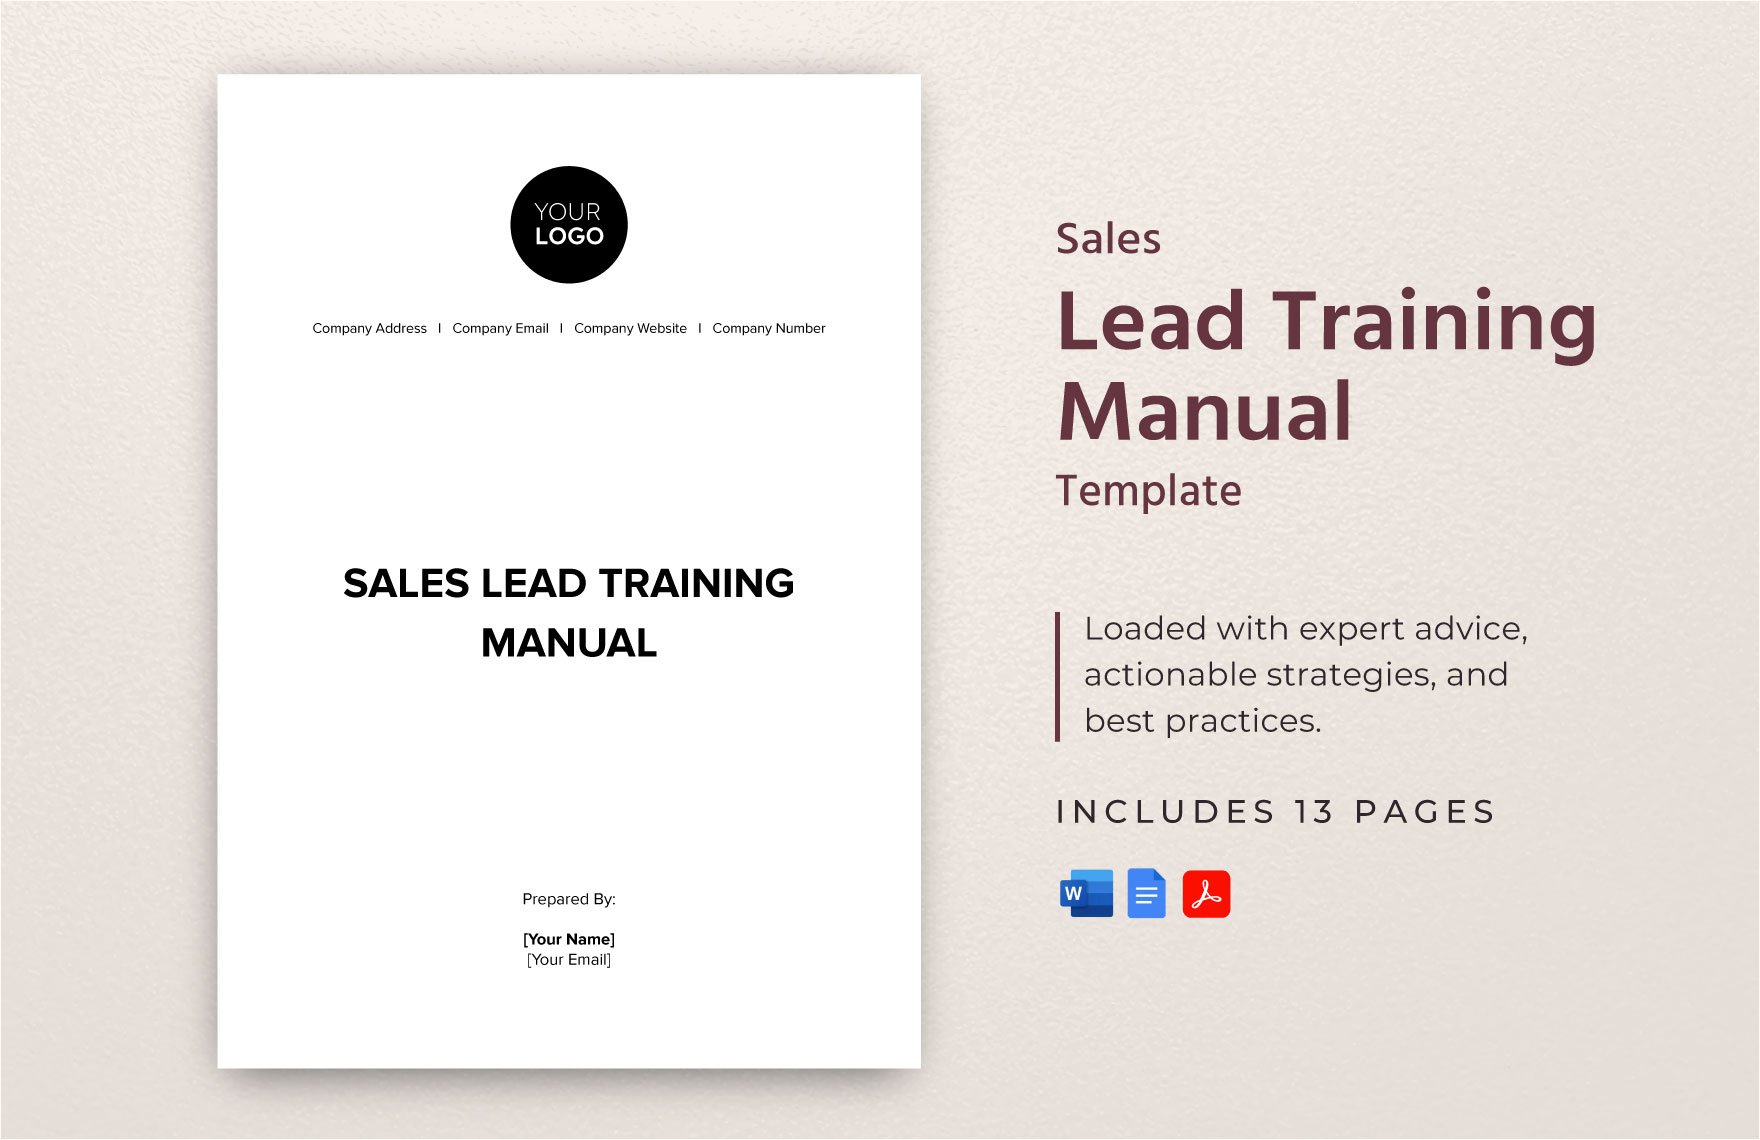 Sales Lead Training Manual Template in Word, Google Docs, PDF